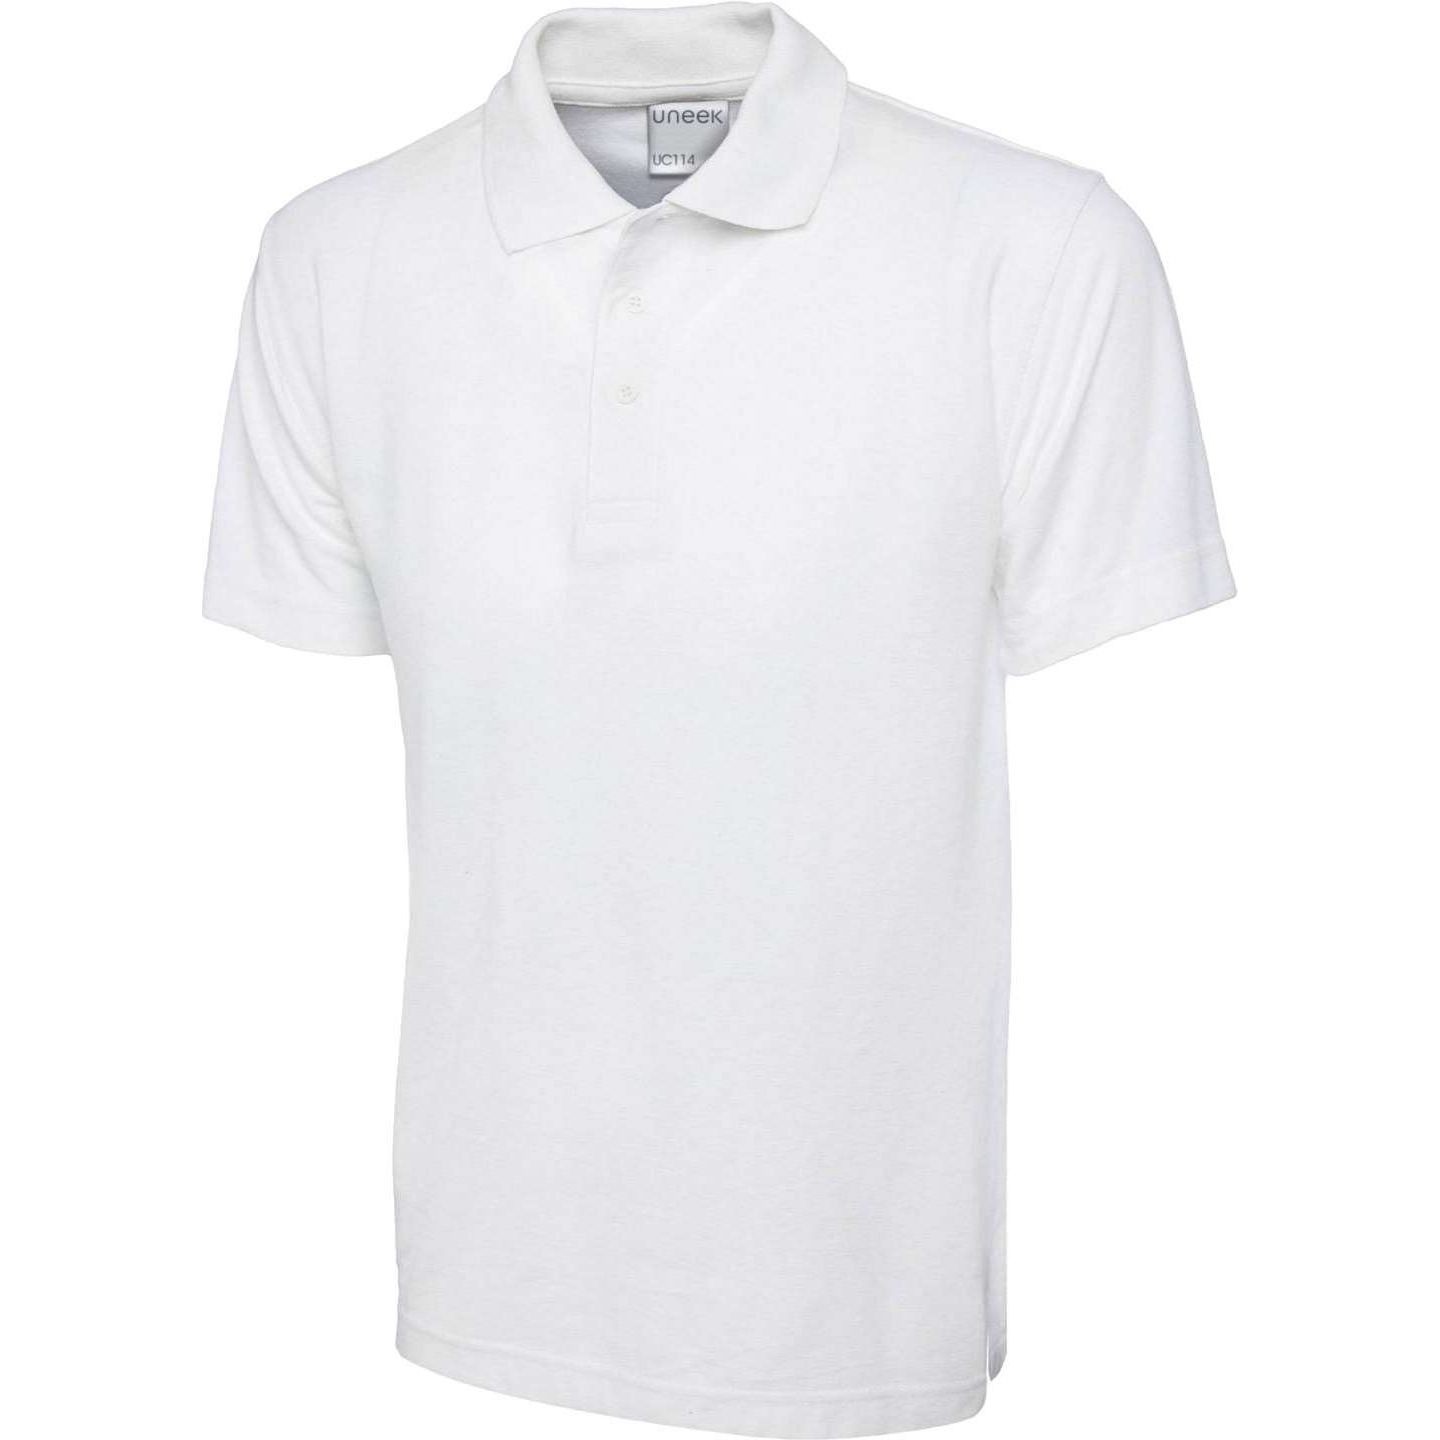 Uneek Mens Active Cotton Poloshirt - UC114